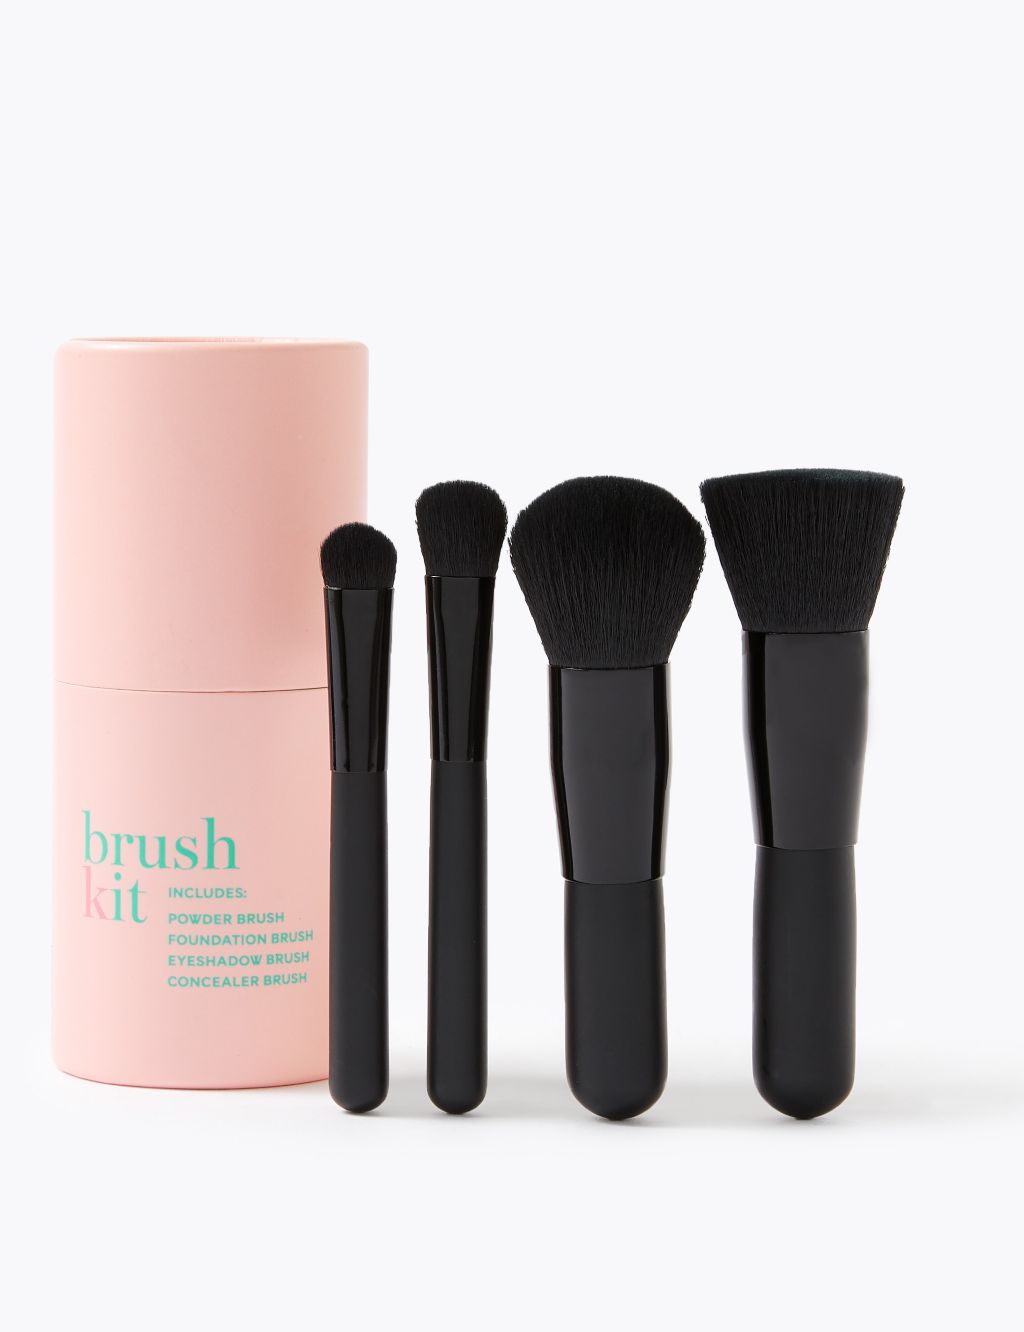 Makeup Brush Set,20 Pcs Professional Makeup Brushes Foundation Eyeshadow  Blush Brush,Concealers Face Powder Eye Make Up Brushes Set Kit (Champagne)